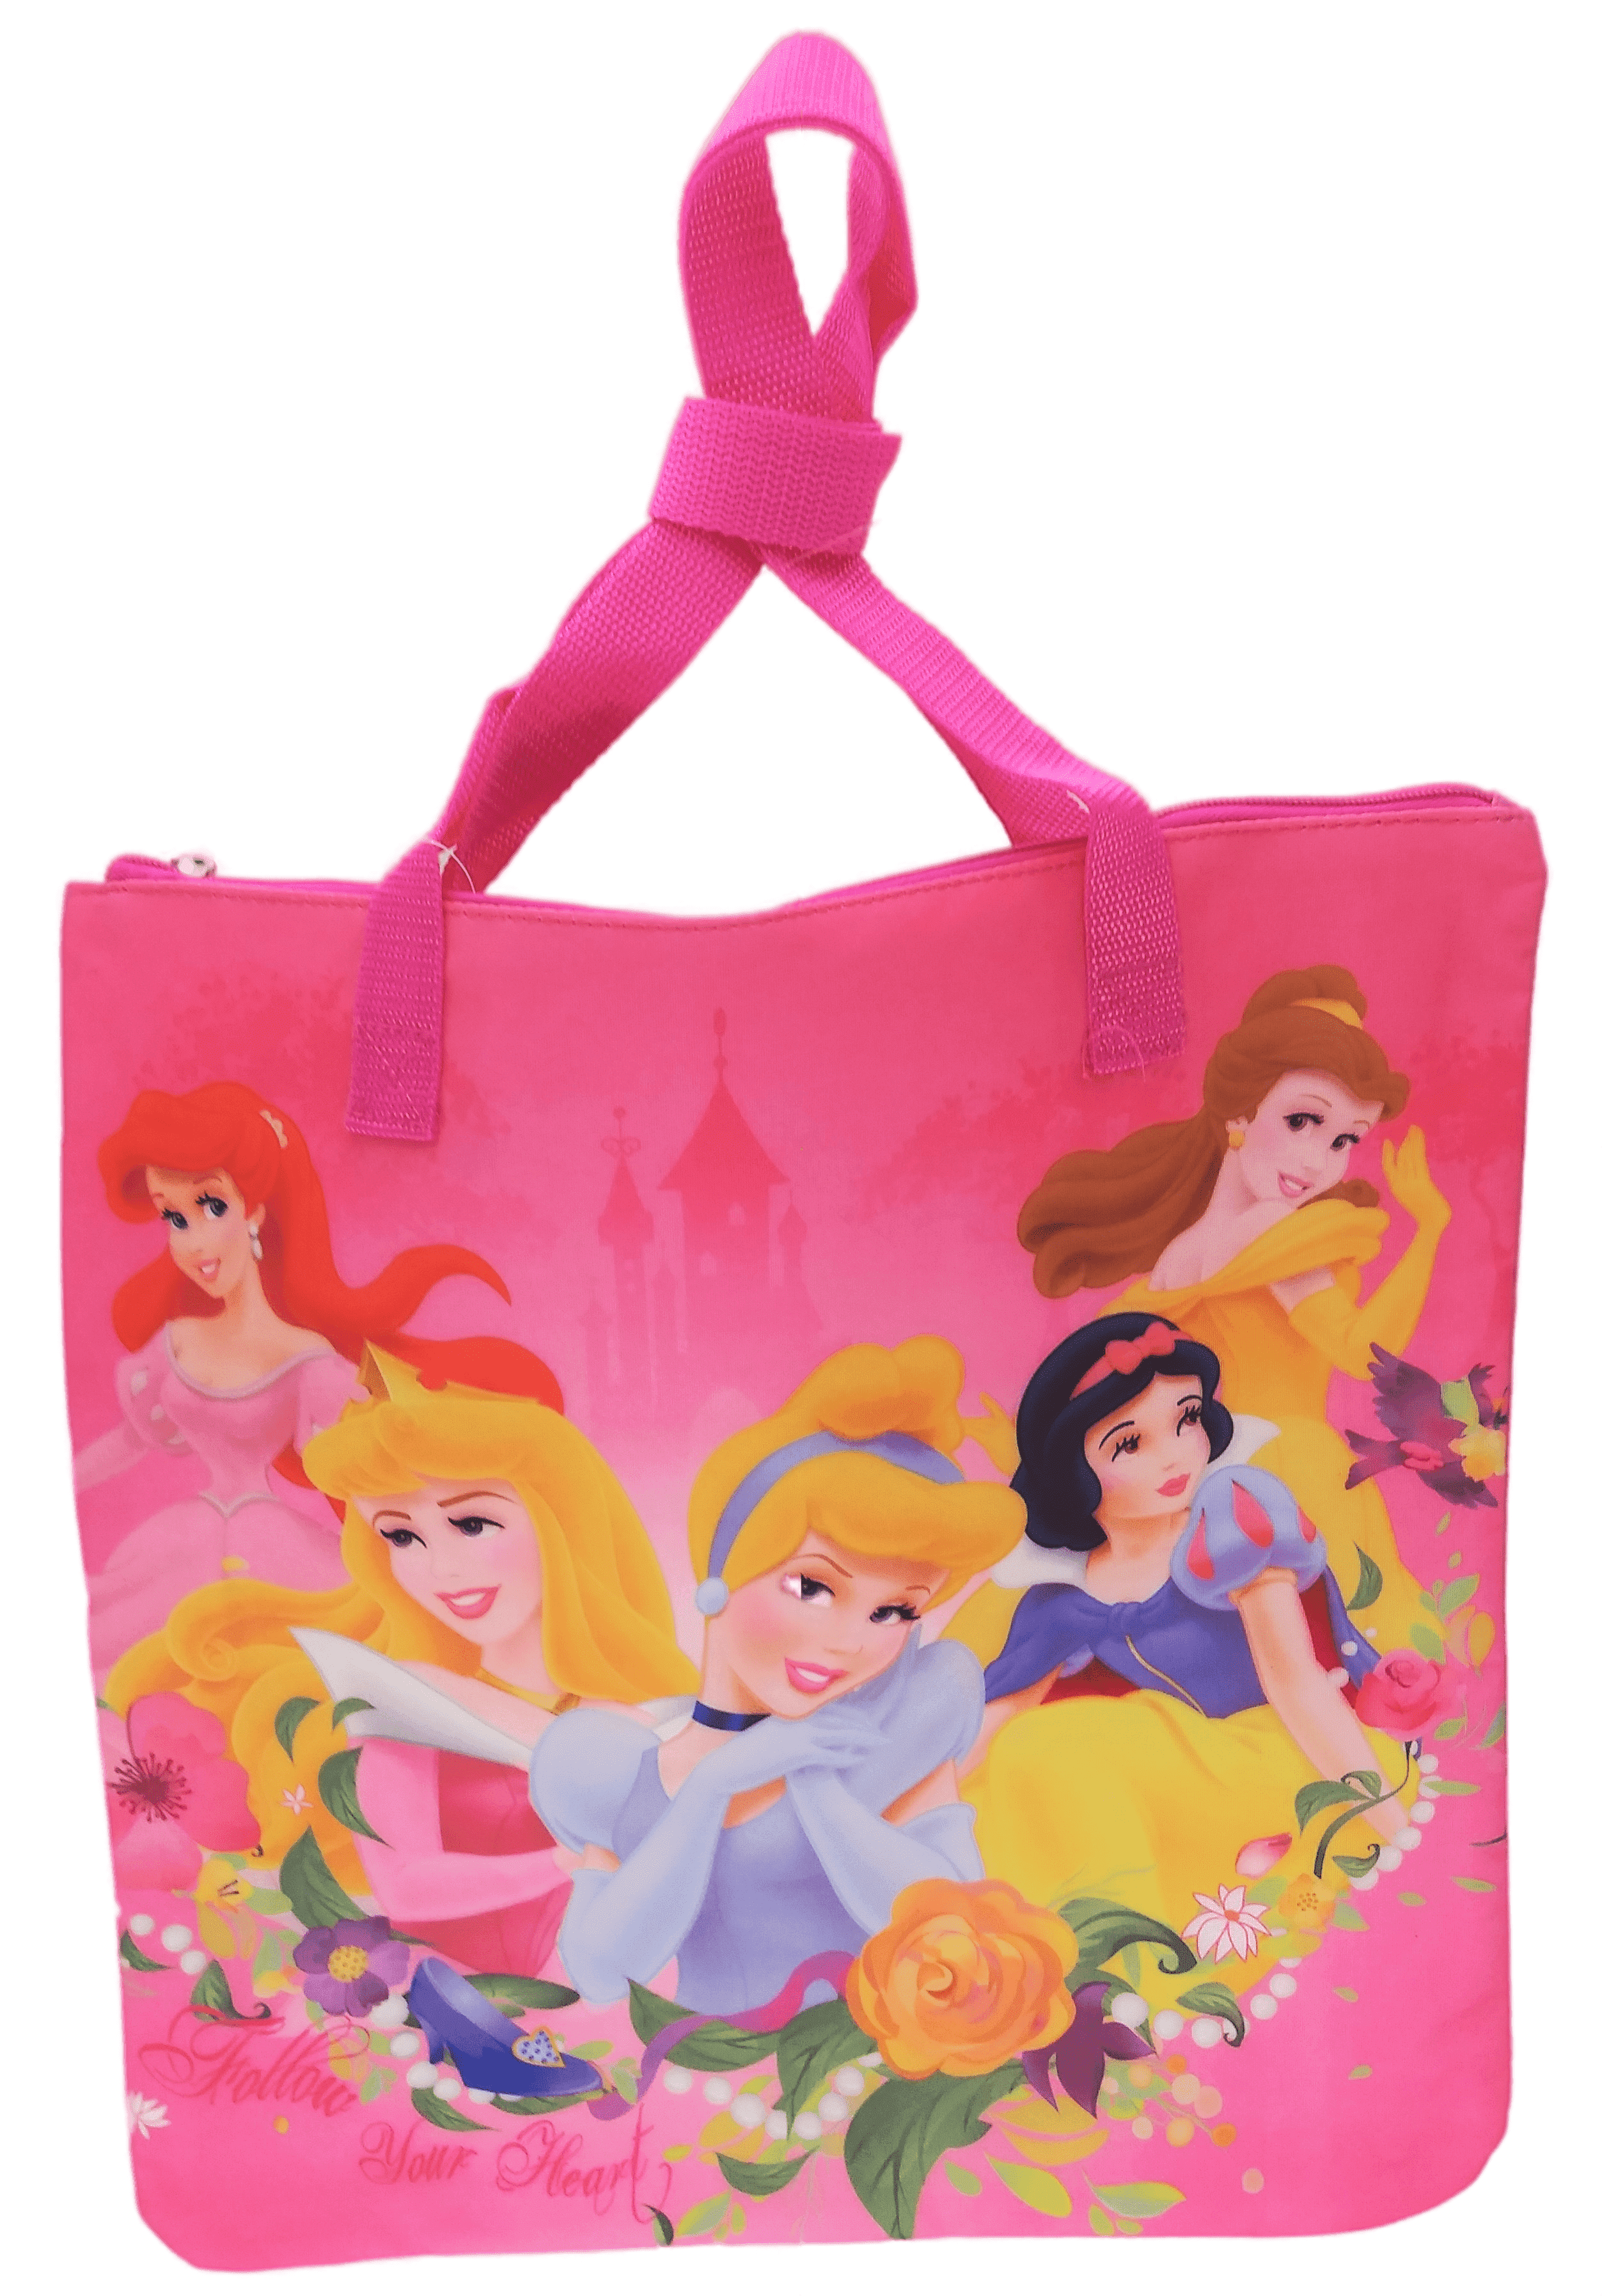 CCH x Disney Sleeping Beauty Tote Bag Pre-order Nov ETA 🩷 DM Loves 💞 50%  dp